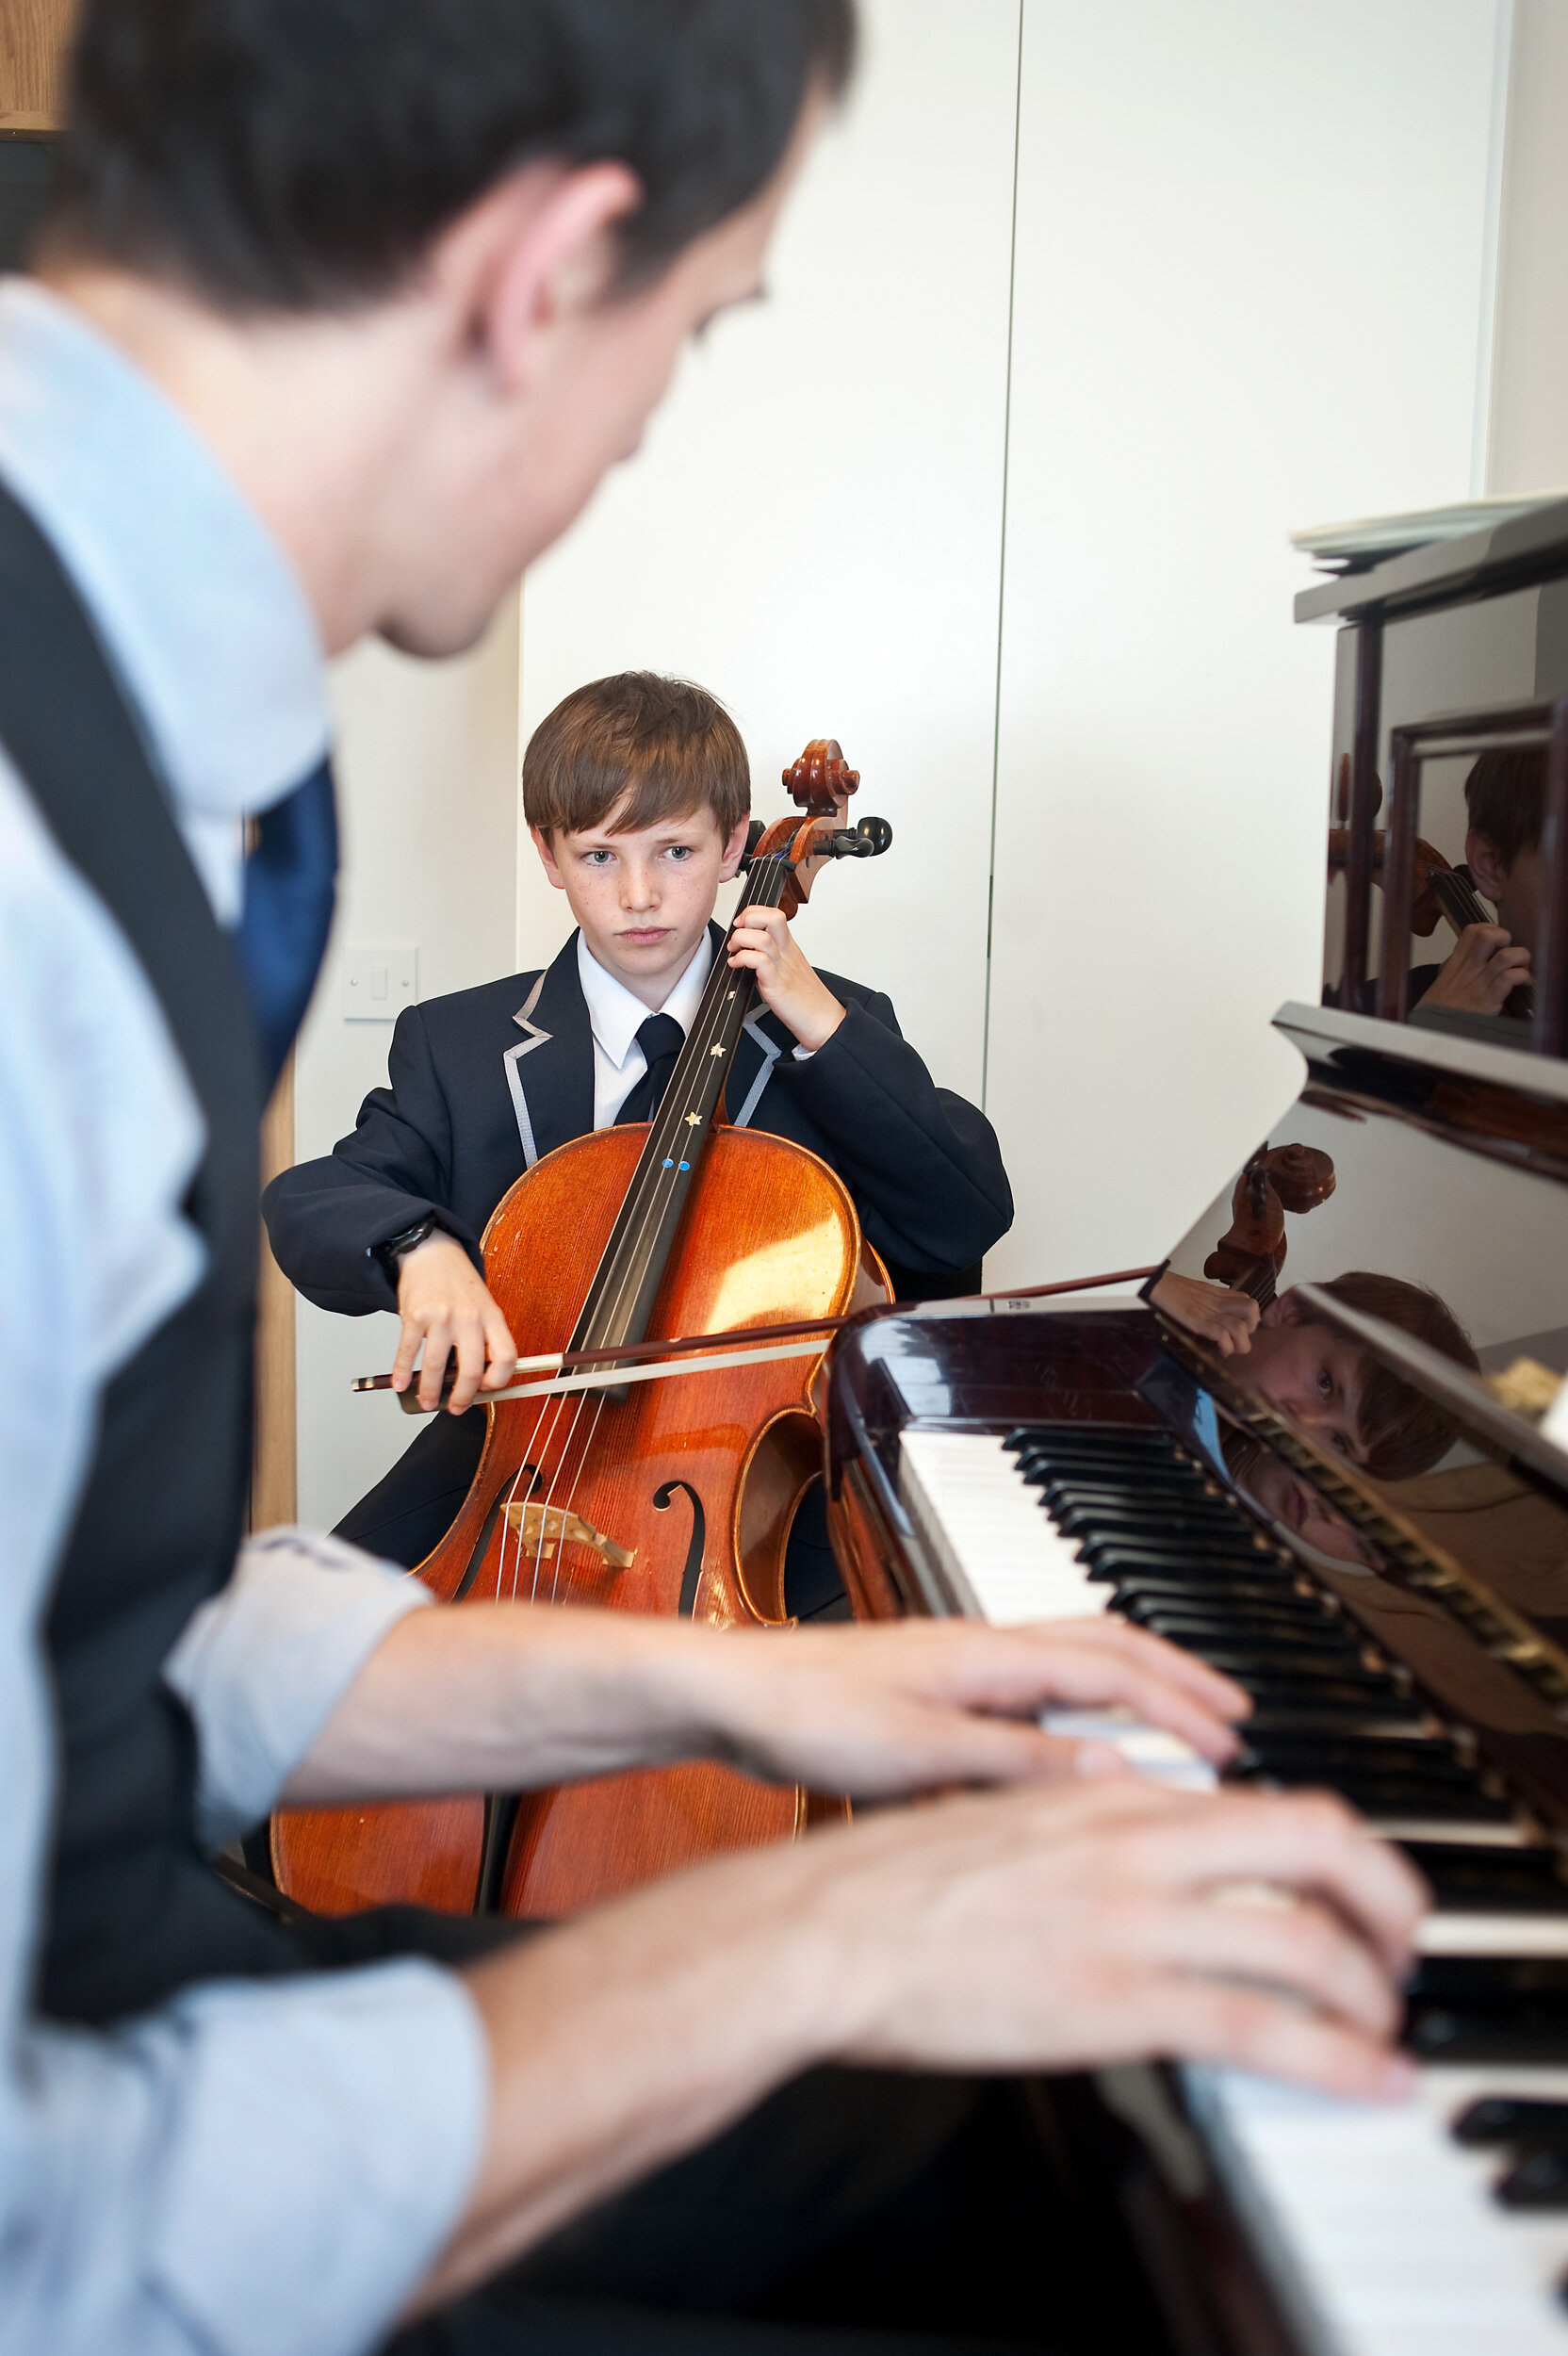  West London Free School, London W6, UK.  Cello lesson.  Shot by Eleanor Bentall, photographer. 